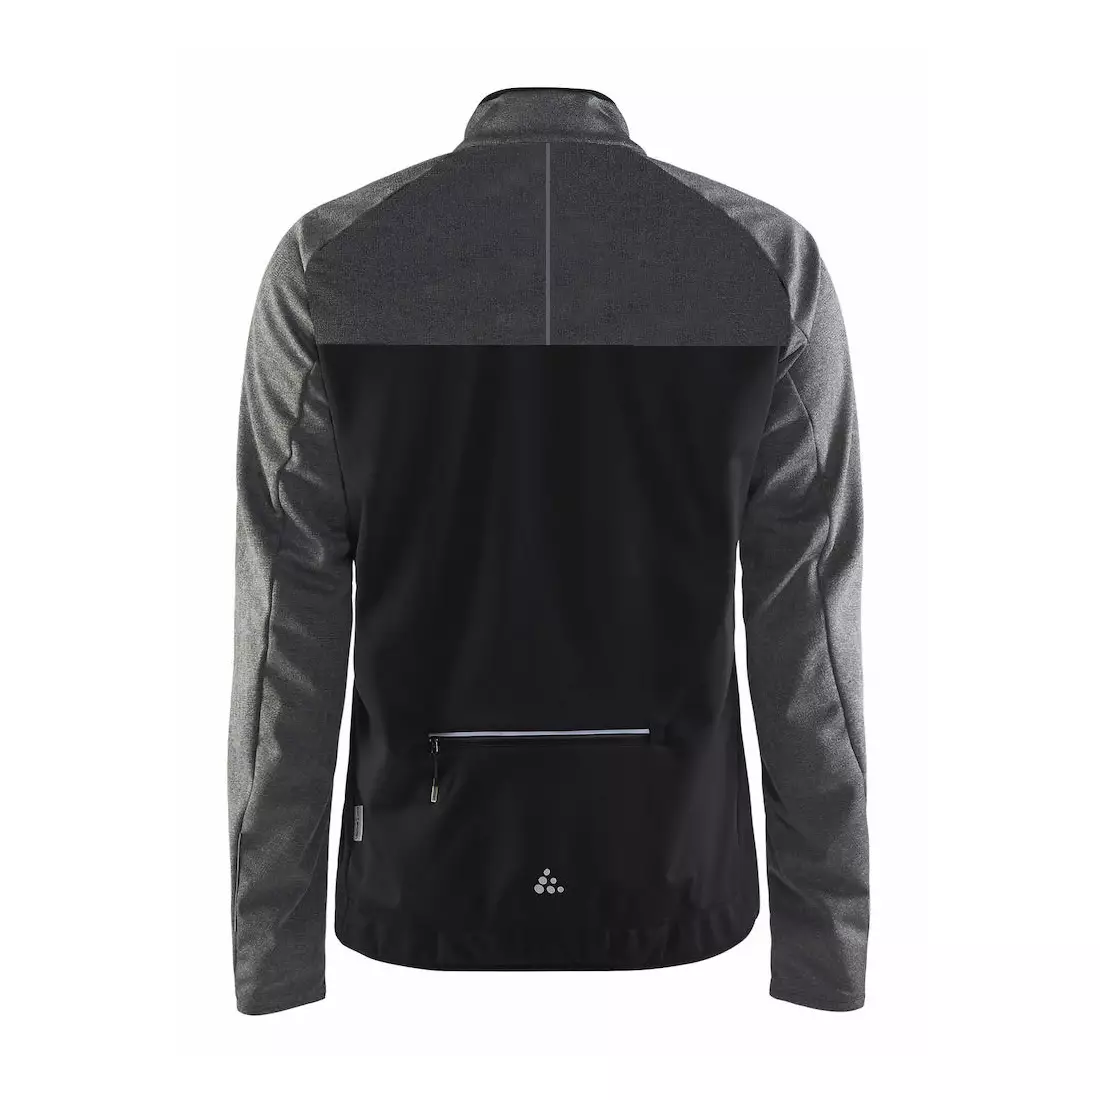 CRAFT RIME winter cycling jacket, black-gray 1905452-975999